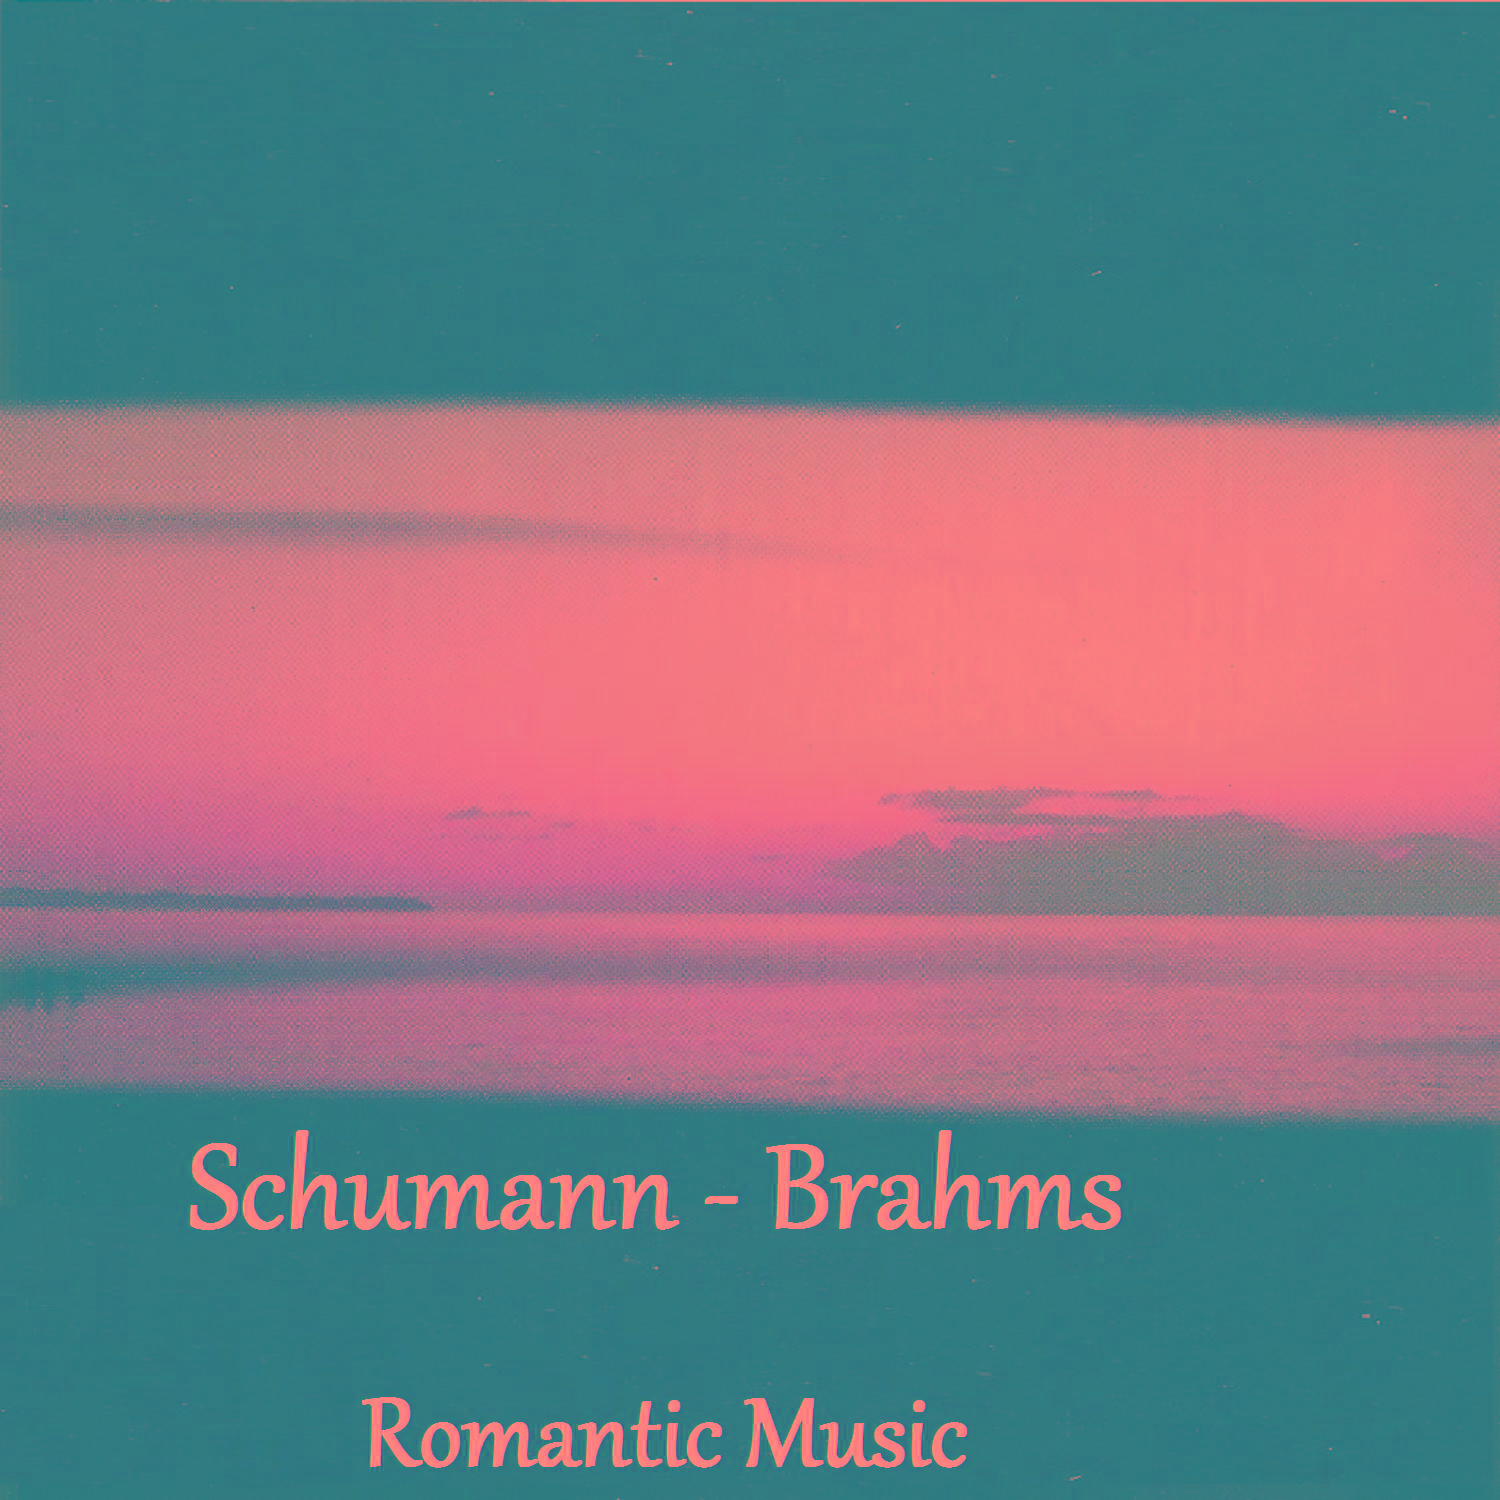 Schumann - Brahms - Romantic Music